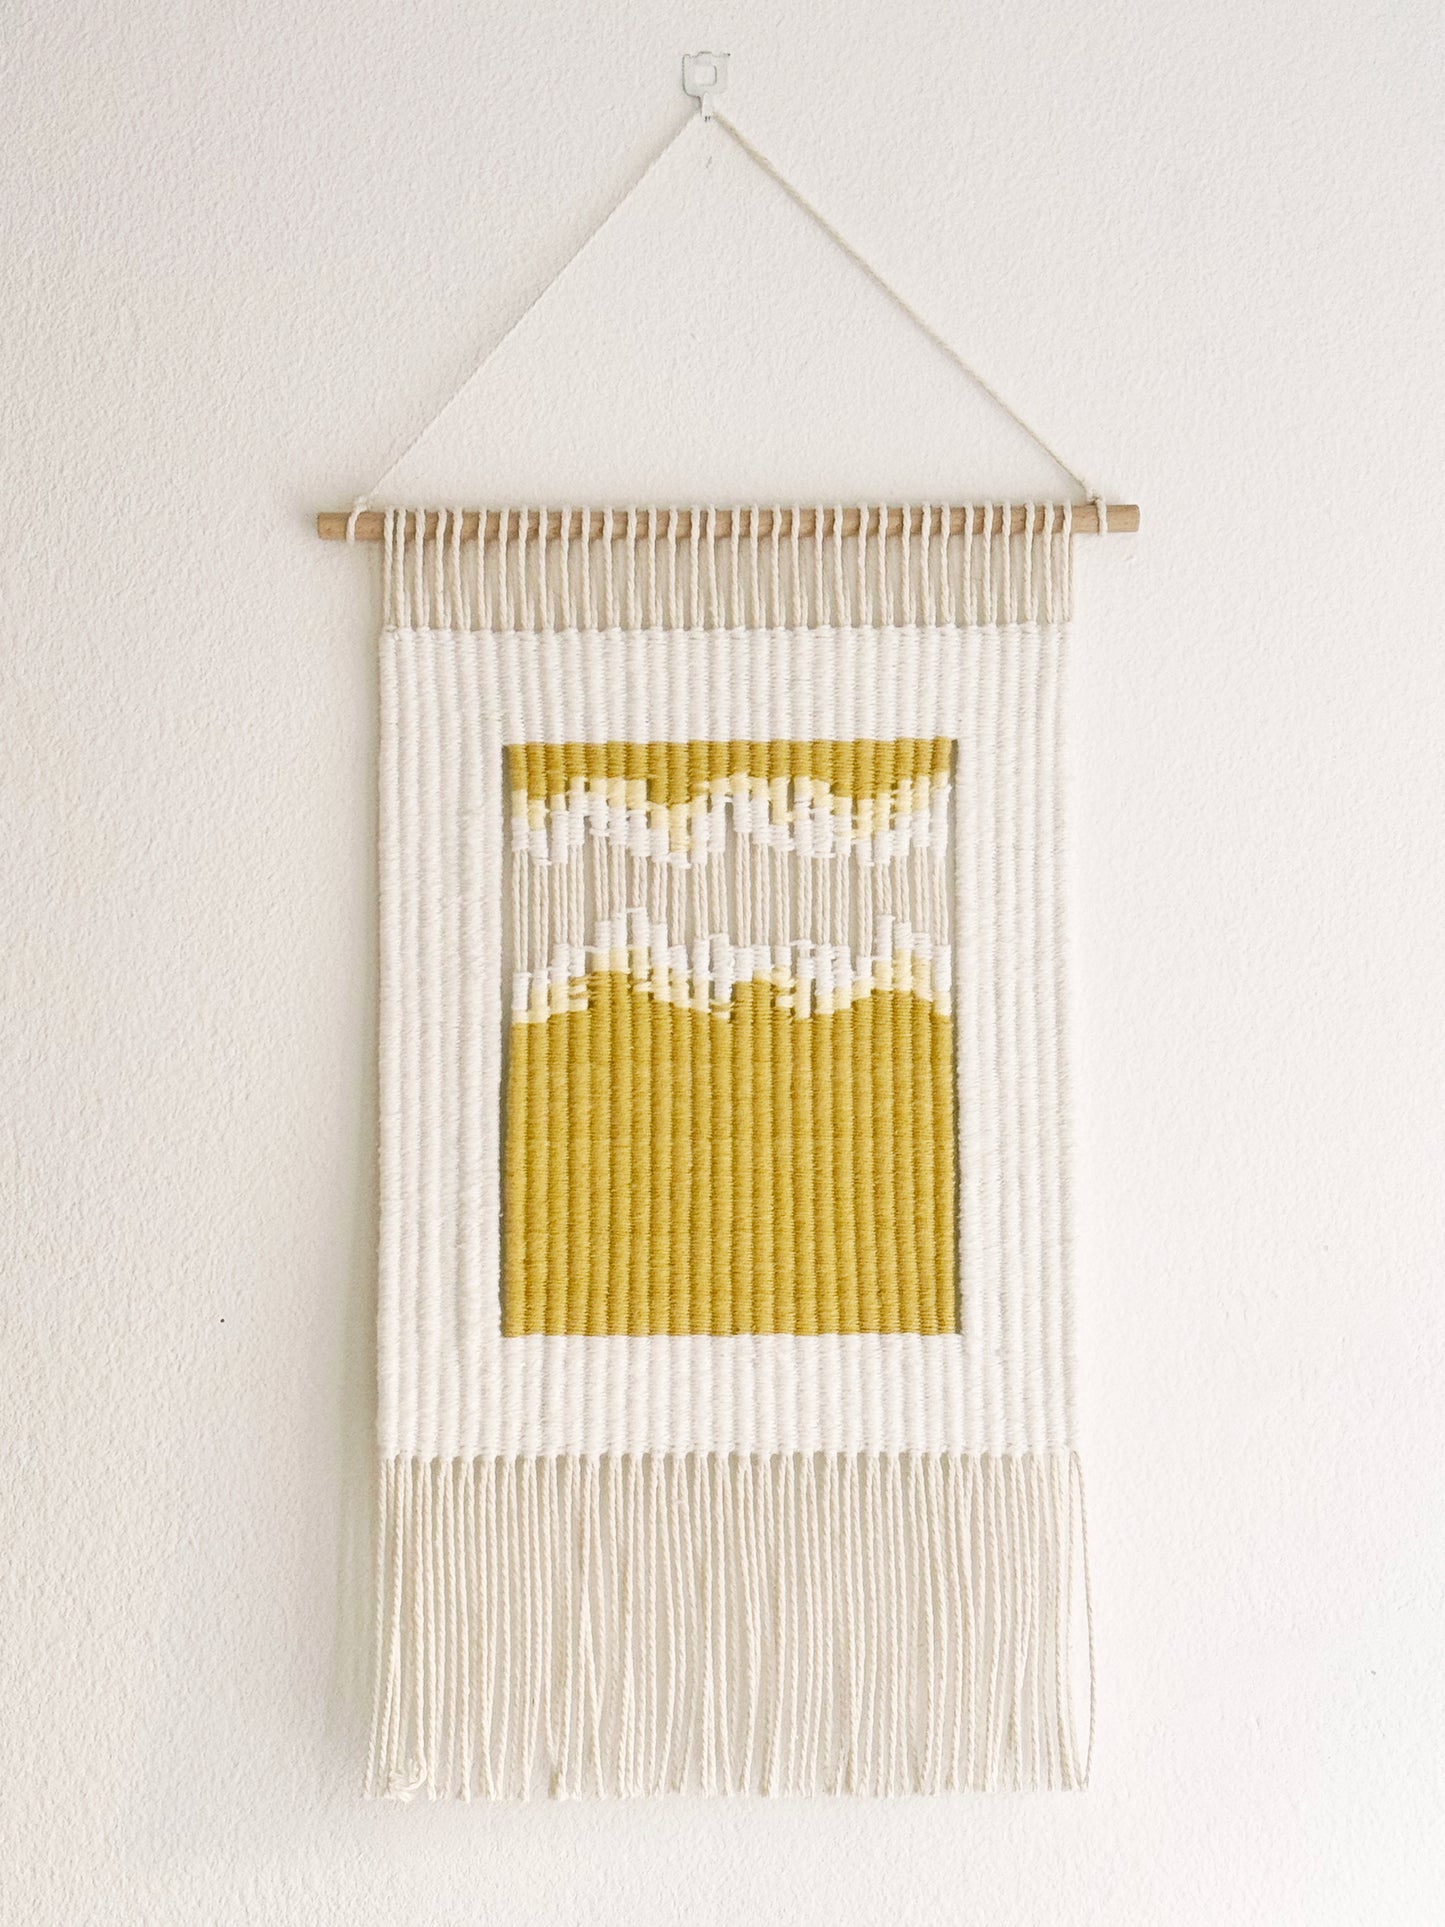 Wall-Hanging Tapestry - Mustard Waves